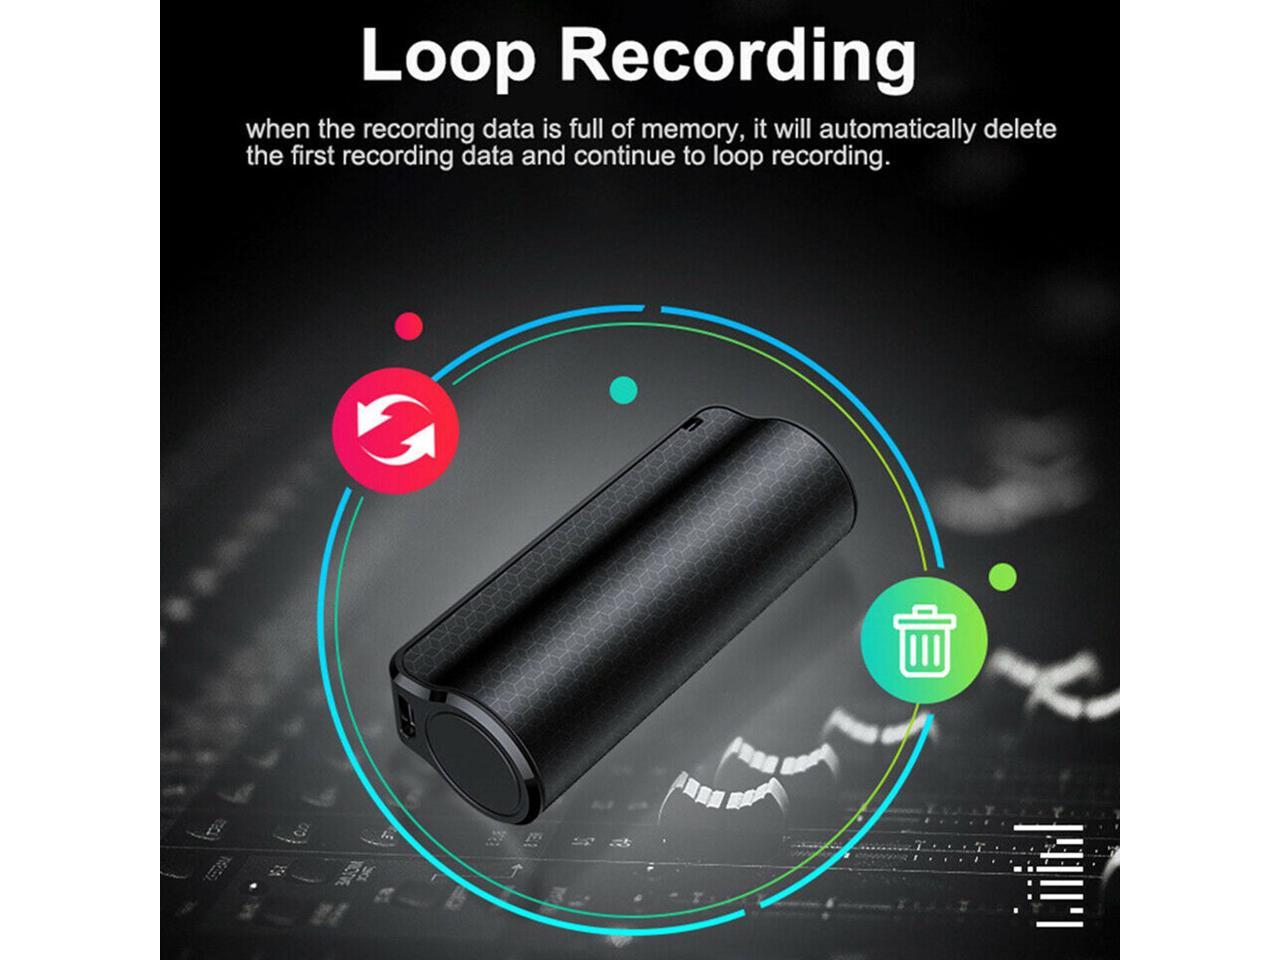 MP3 Spy Magnetic Recording Device Hidden Voice Activated Mini Audio Recorder US 